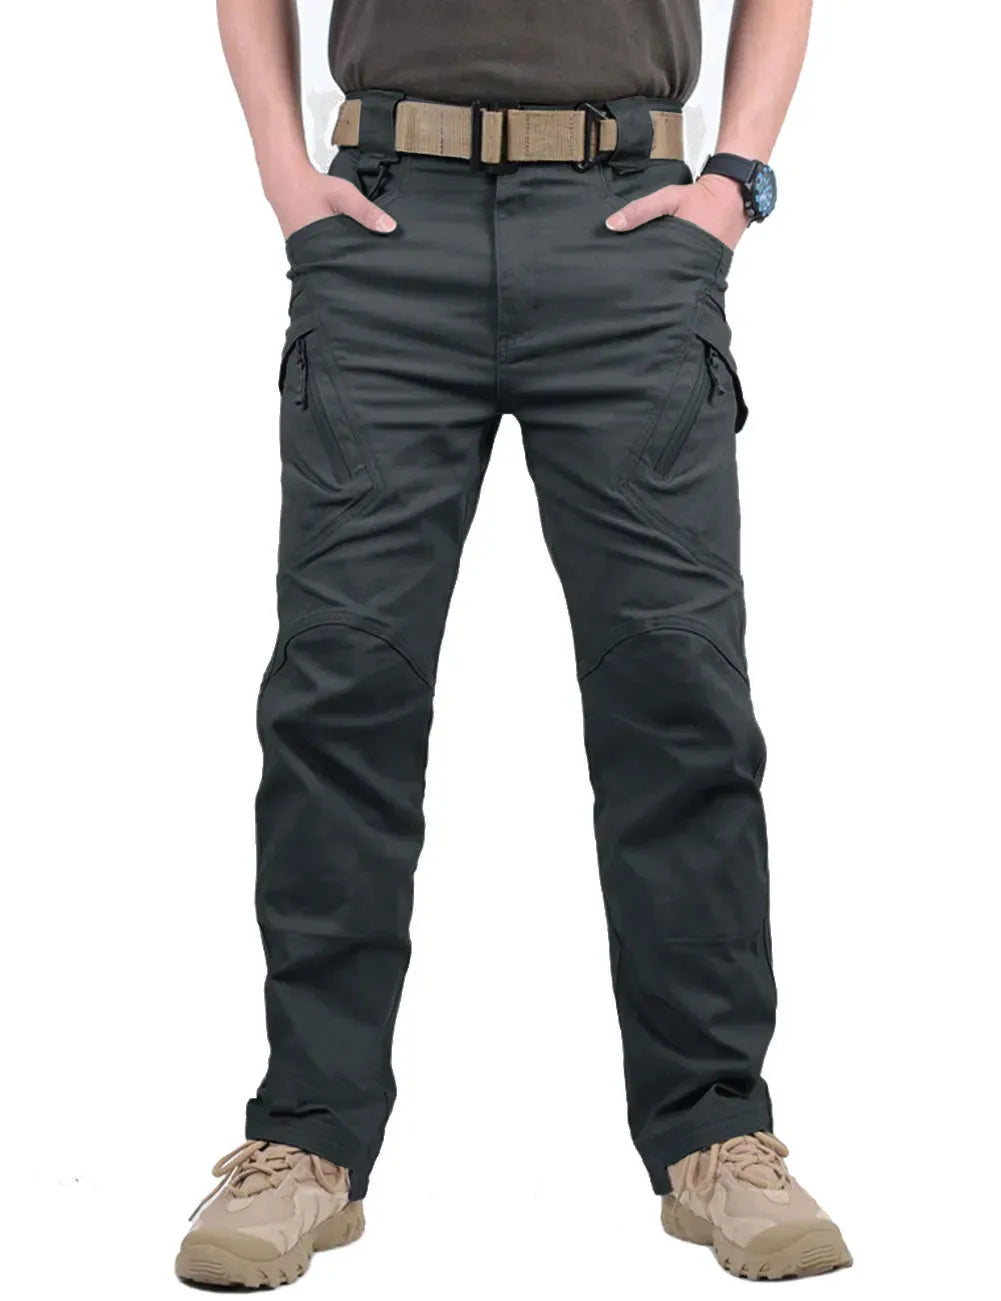 Shop JustGoodKit Tactical Pants for Men - High-Quality Clothing